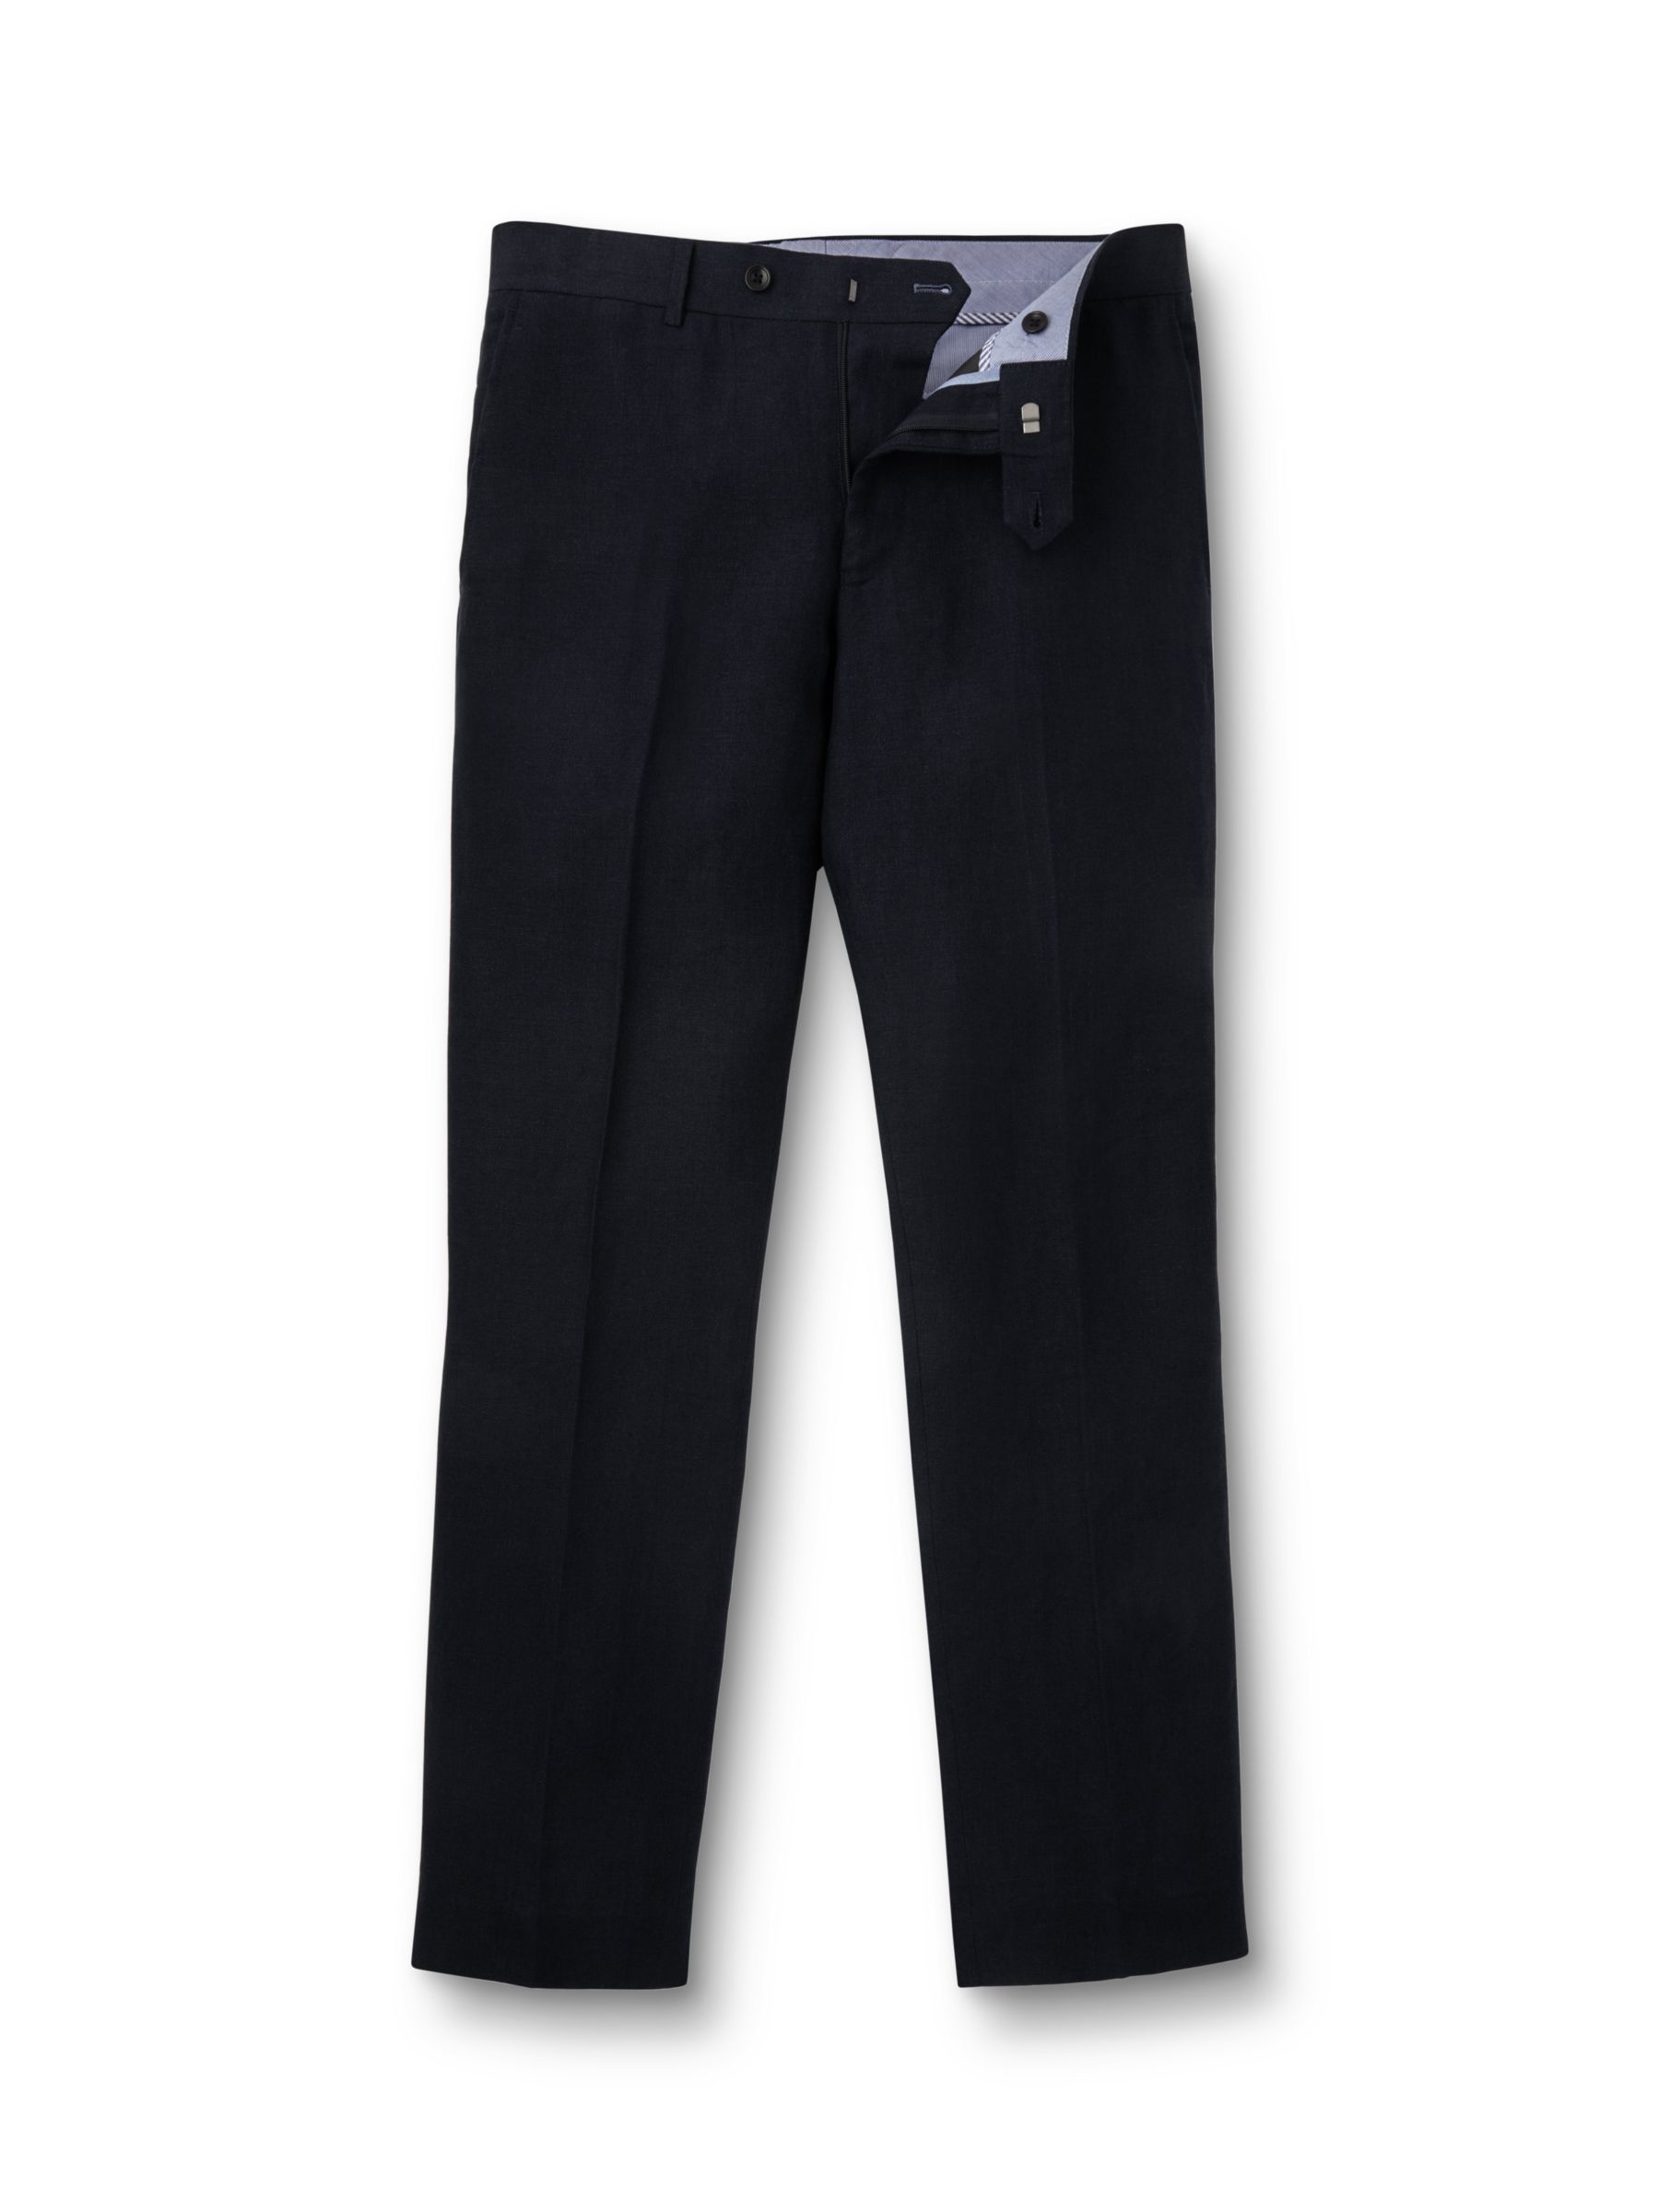 Buy Charles Tyrwhitt Slim Fit Linen Suit Trousers, Dark Navy Online at johnlewis.com